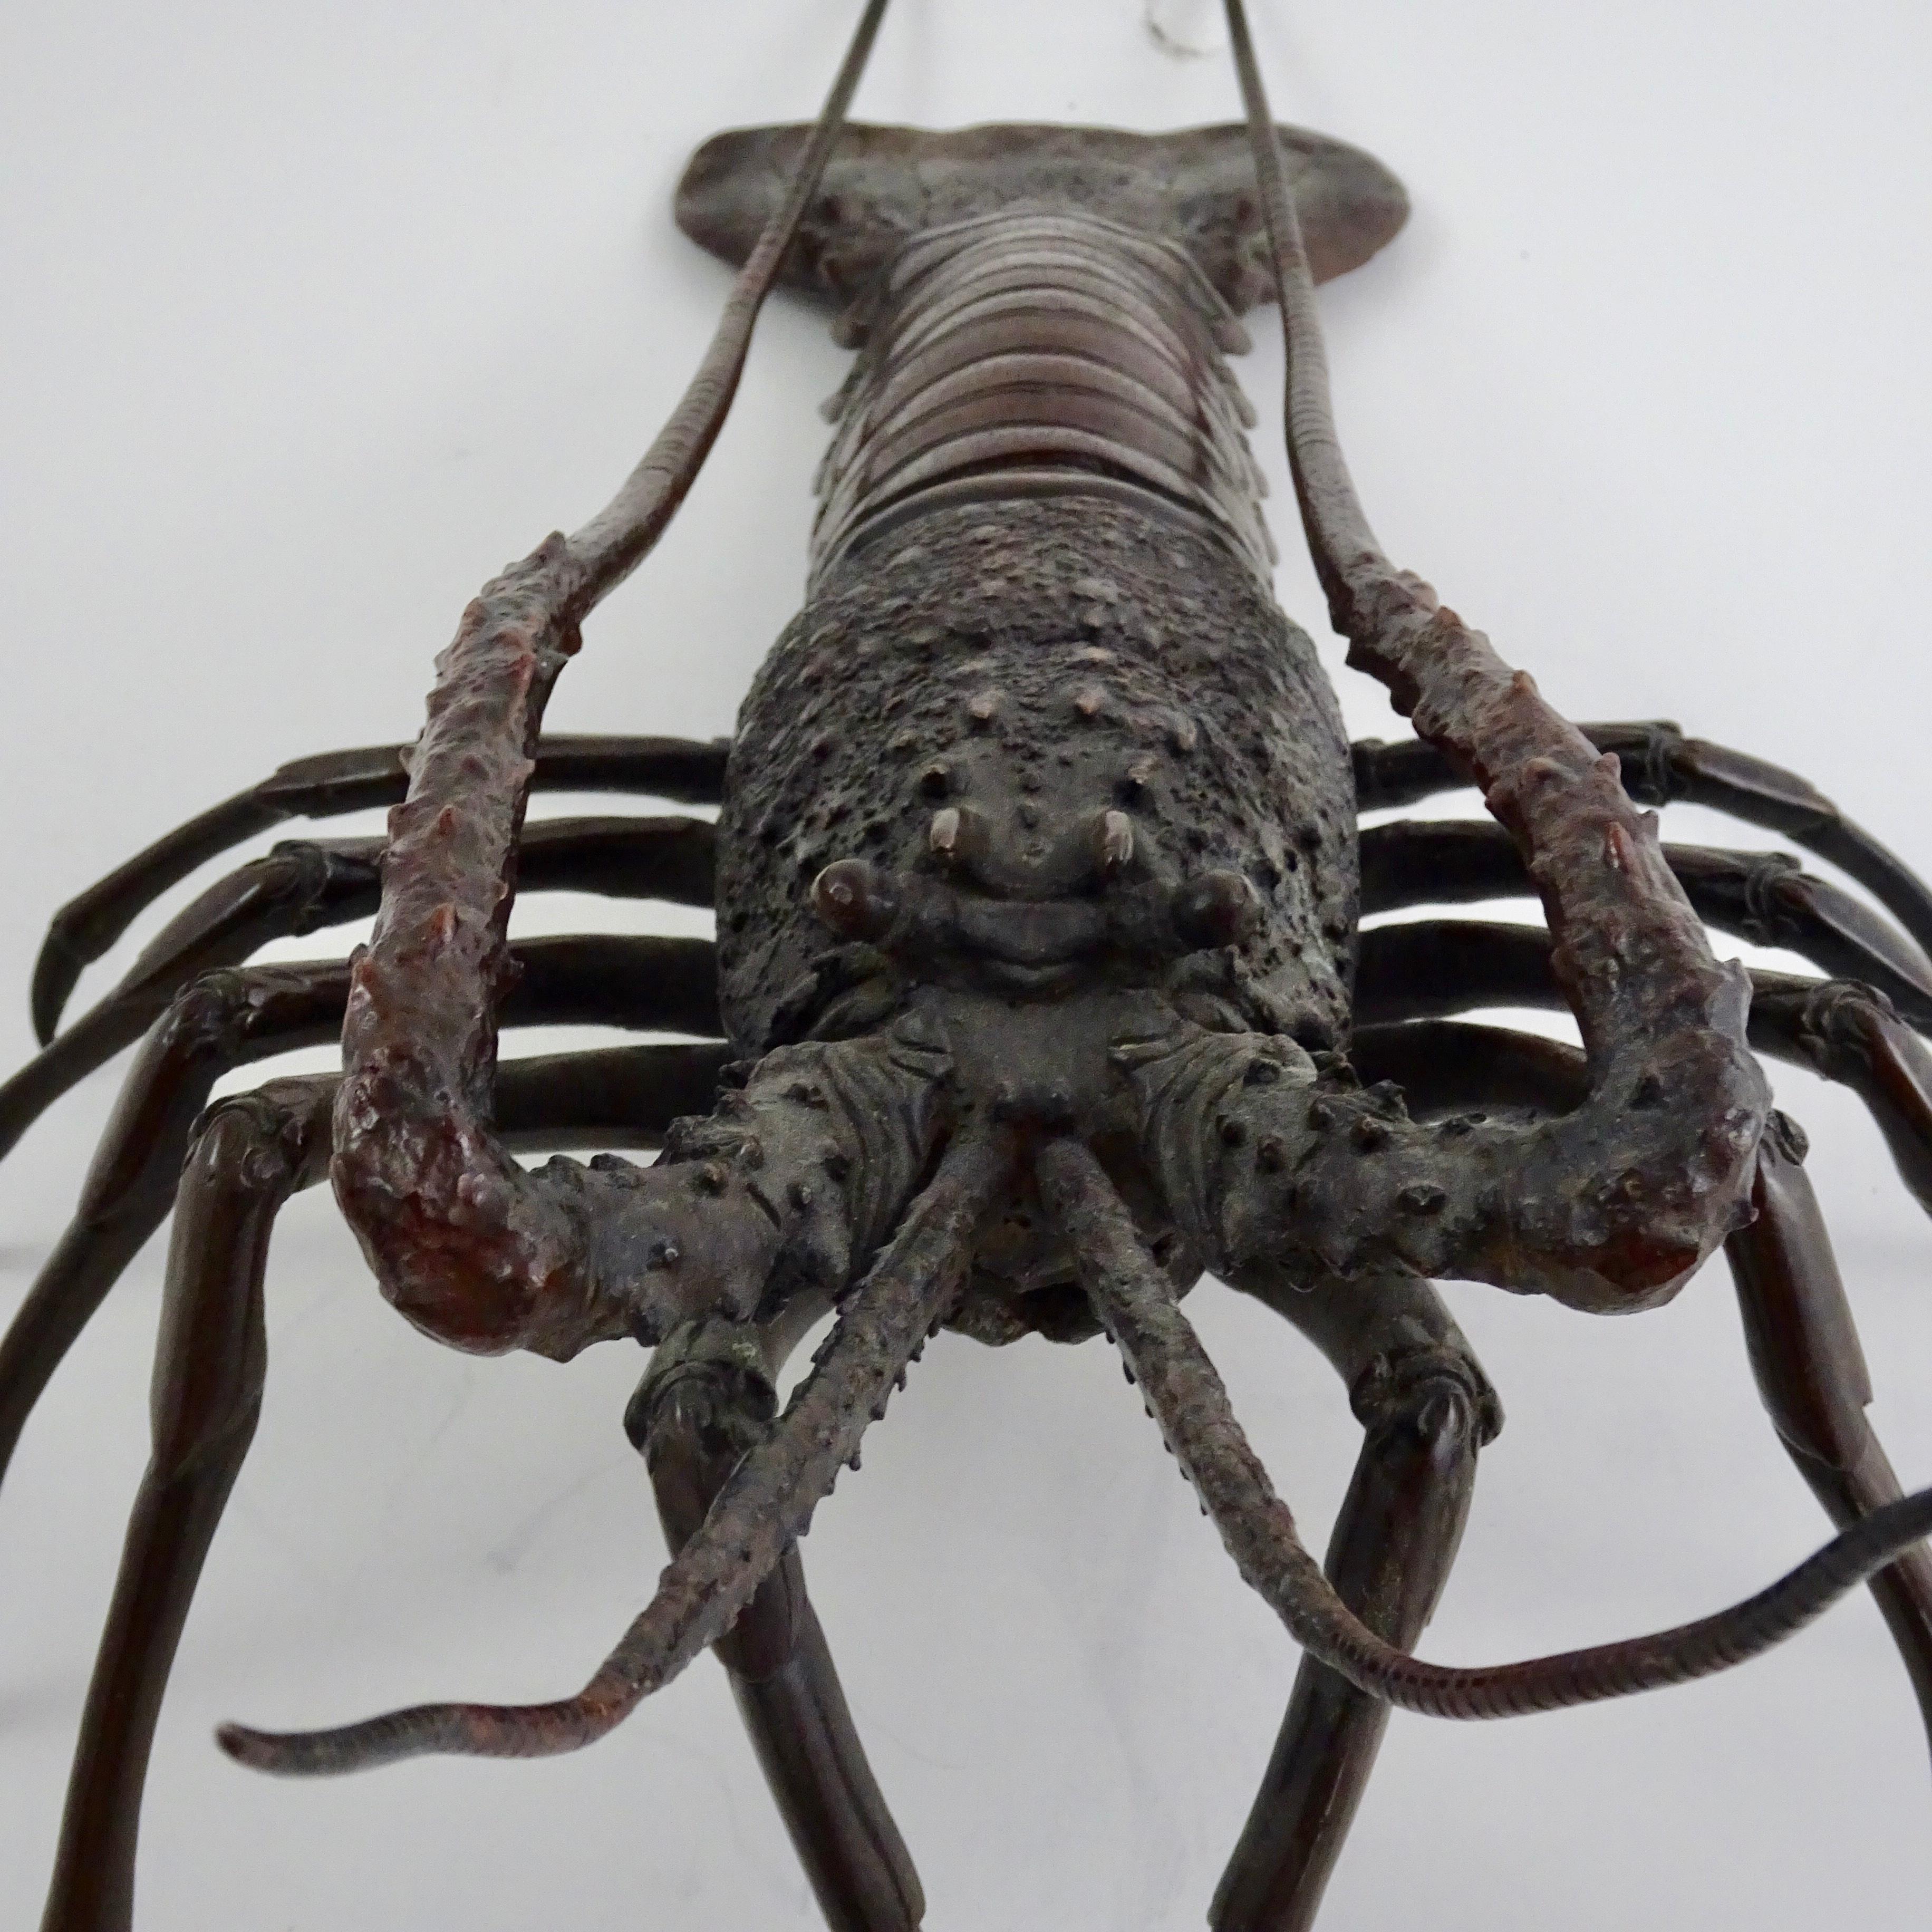 19th century dark bronze crustacean figurine in extraordinary detail.